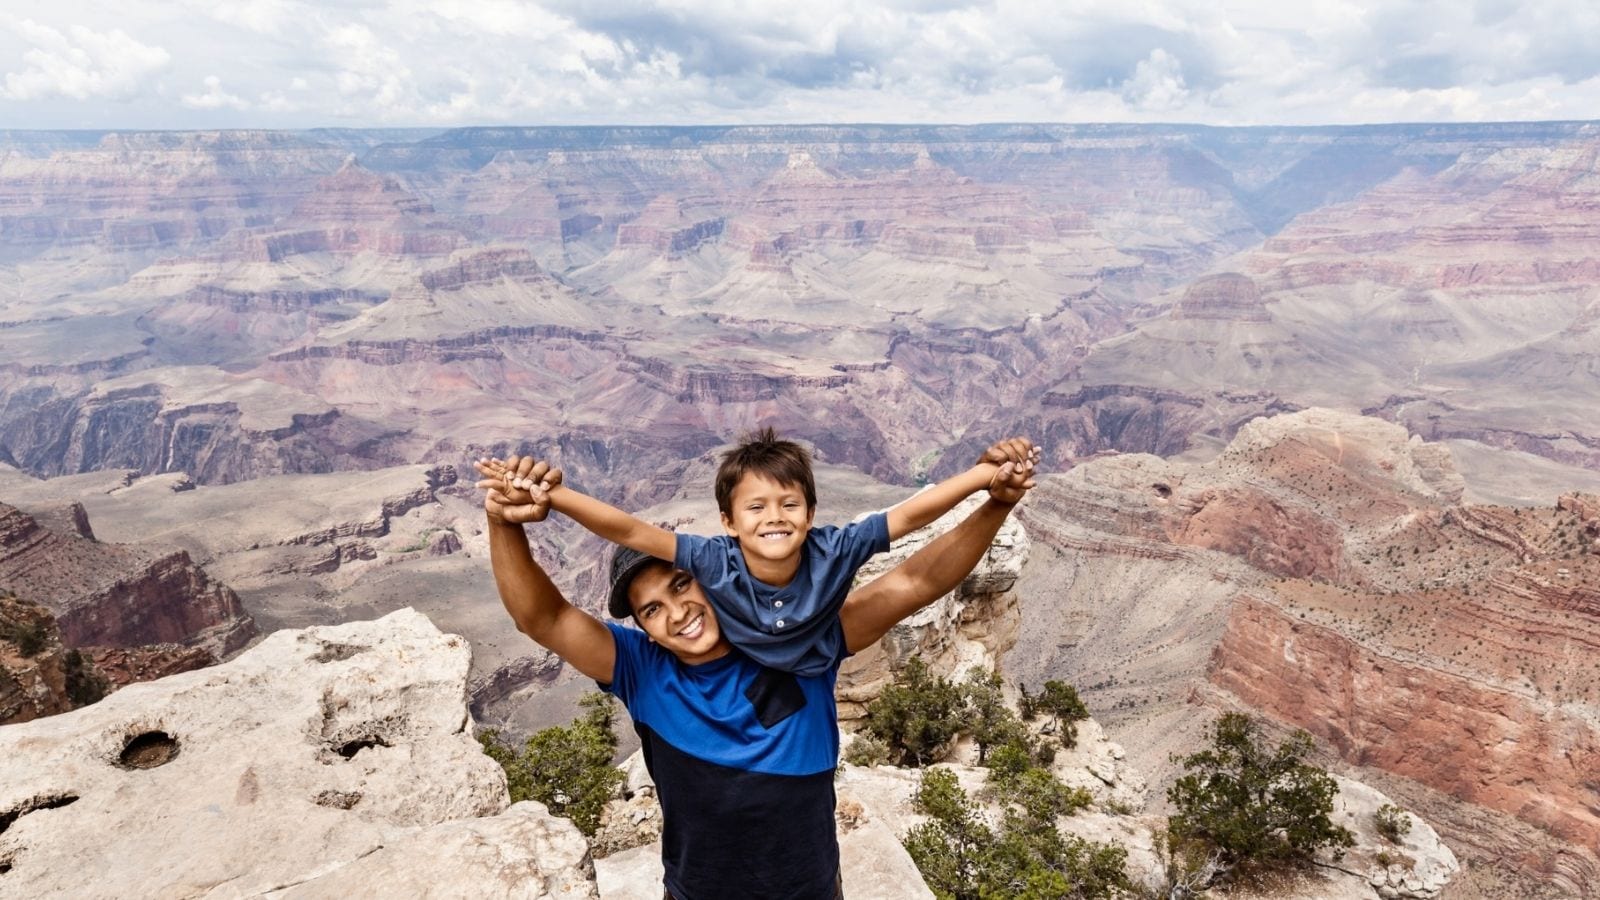 Father and son enjoying a day at Grand Canyon National Park (Photo: @jeniek_smile via Twenty20)